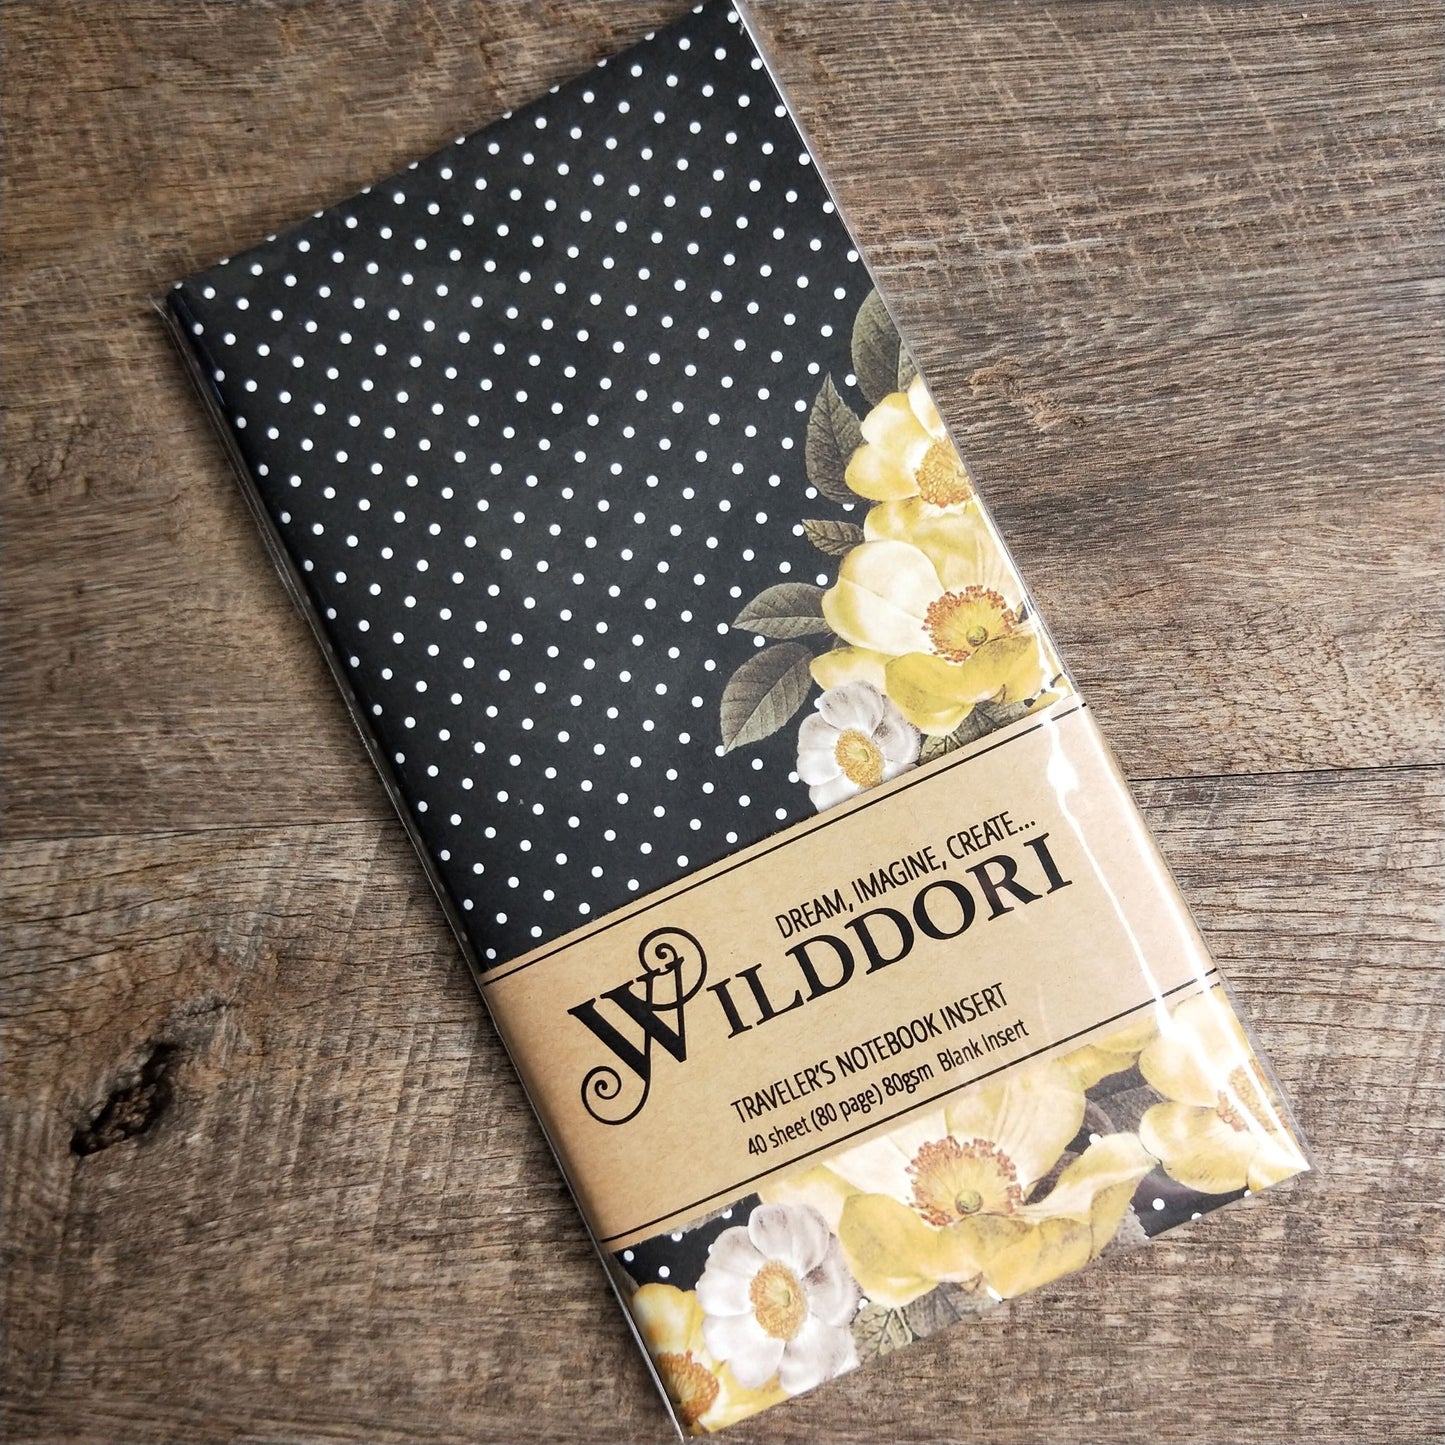 Wilddori 40 sheet Blank Insert - Black Dots and Florals